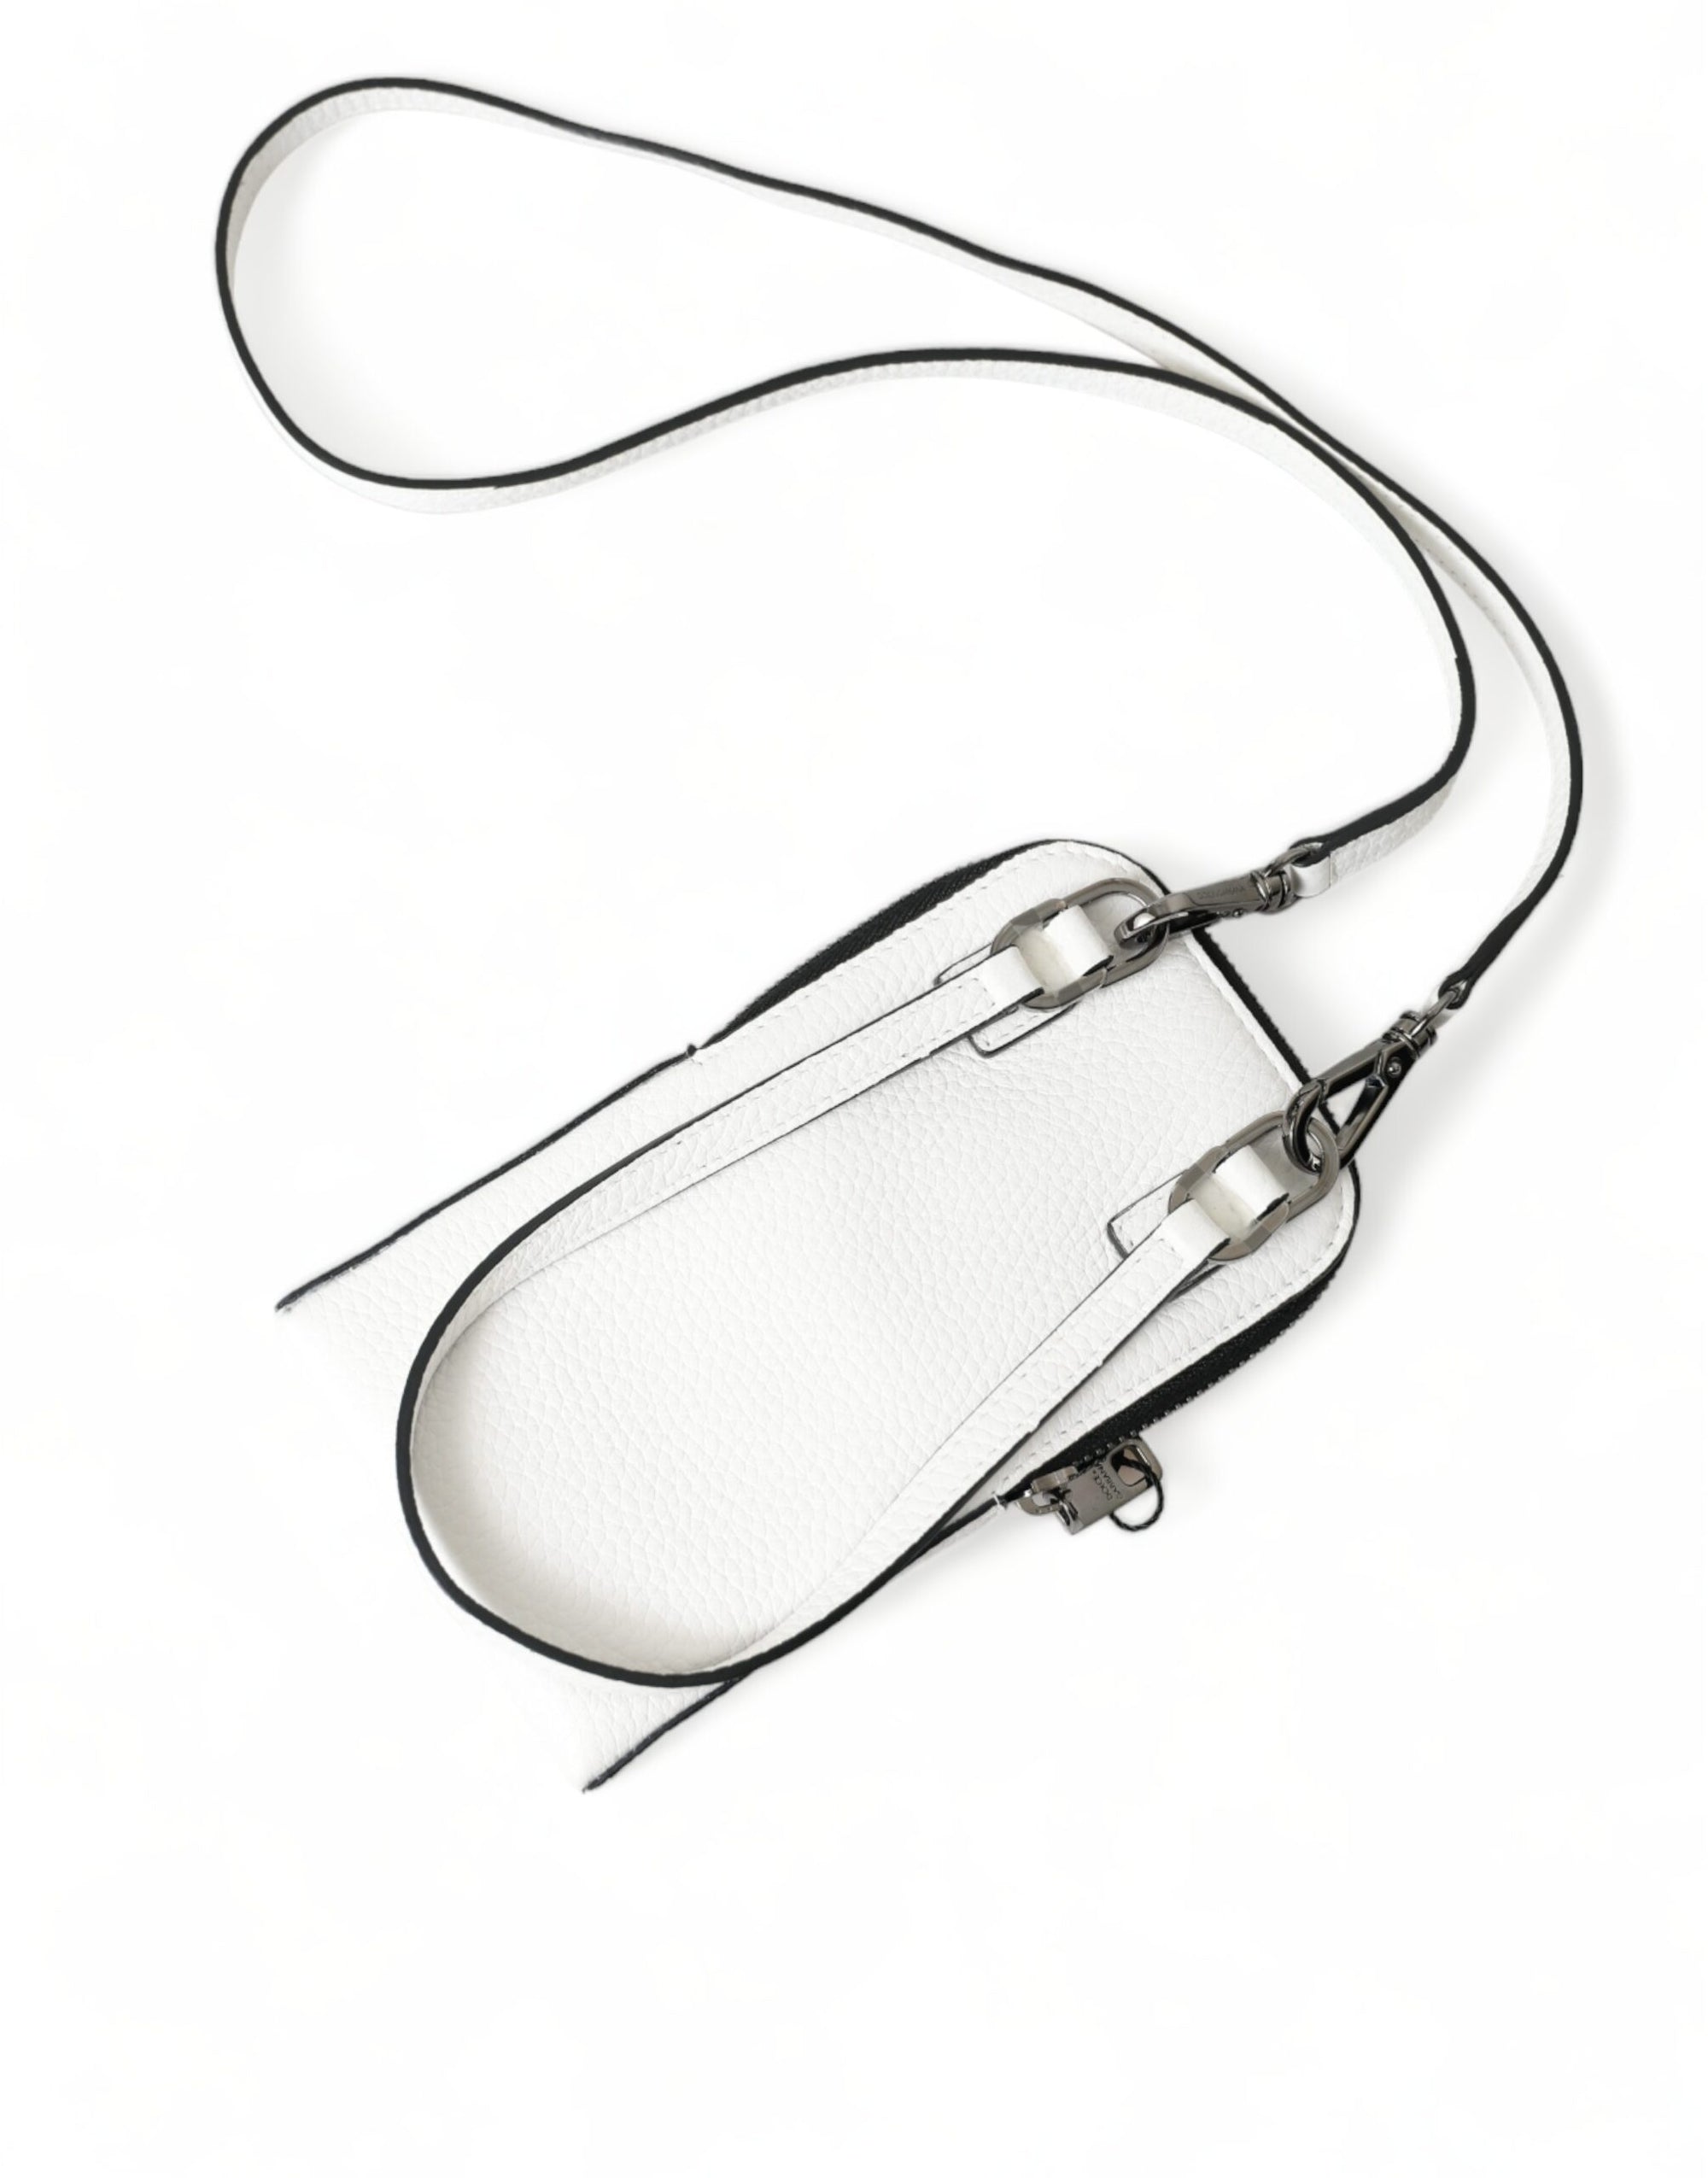 Elegant White Leather Crossbody Phone Bag